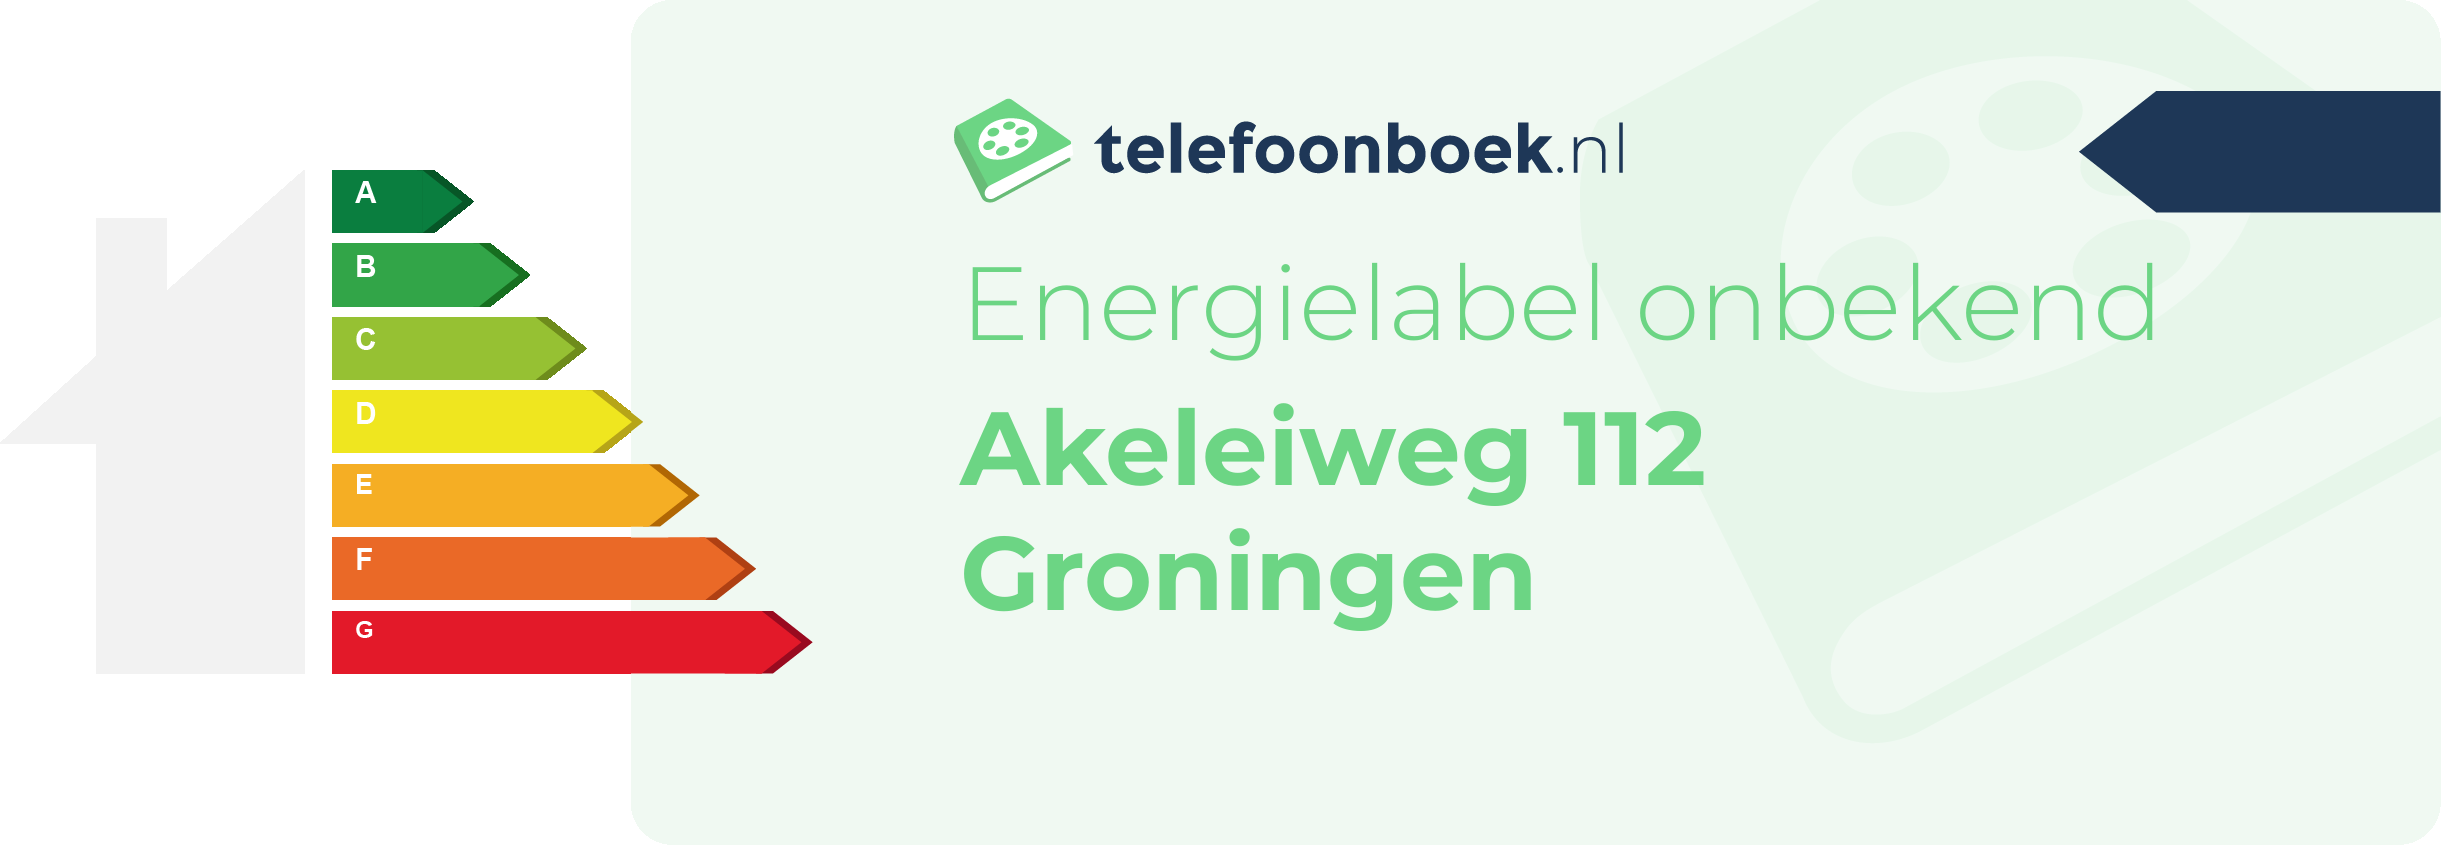 Energielabel Akeleiweg 112 Groningen